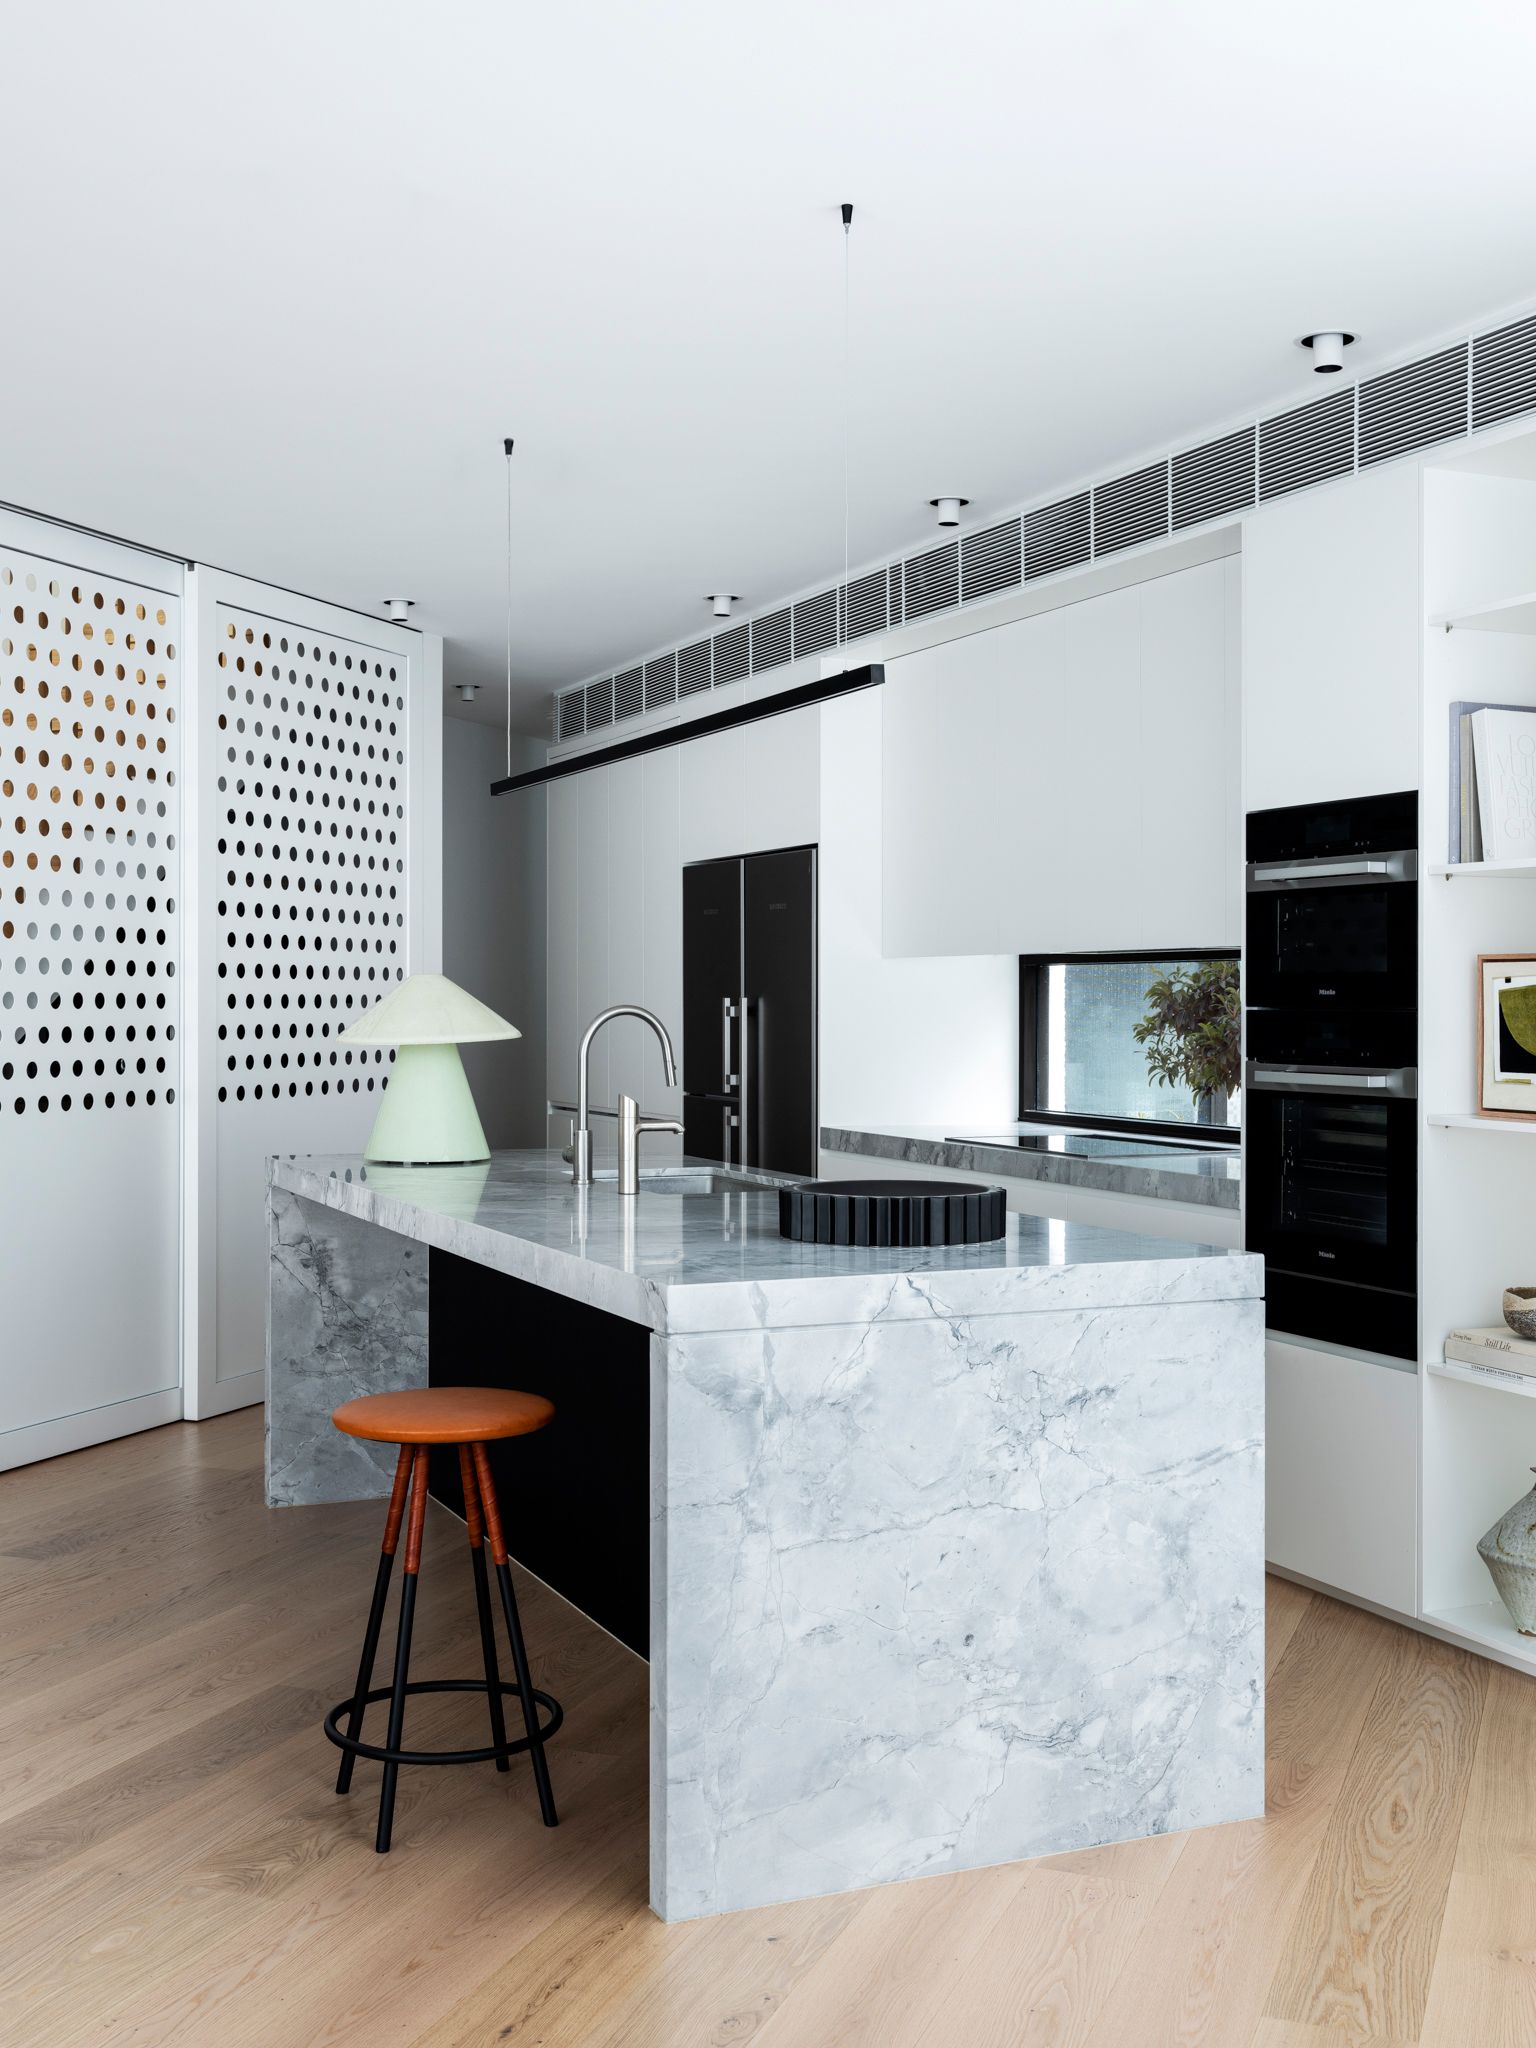 Bondi Beach House by Carla Middleton Architecture. Detailed view of corner kitchen